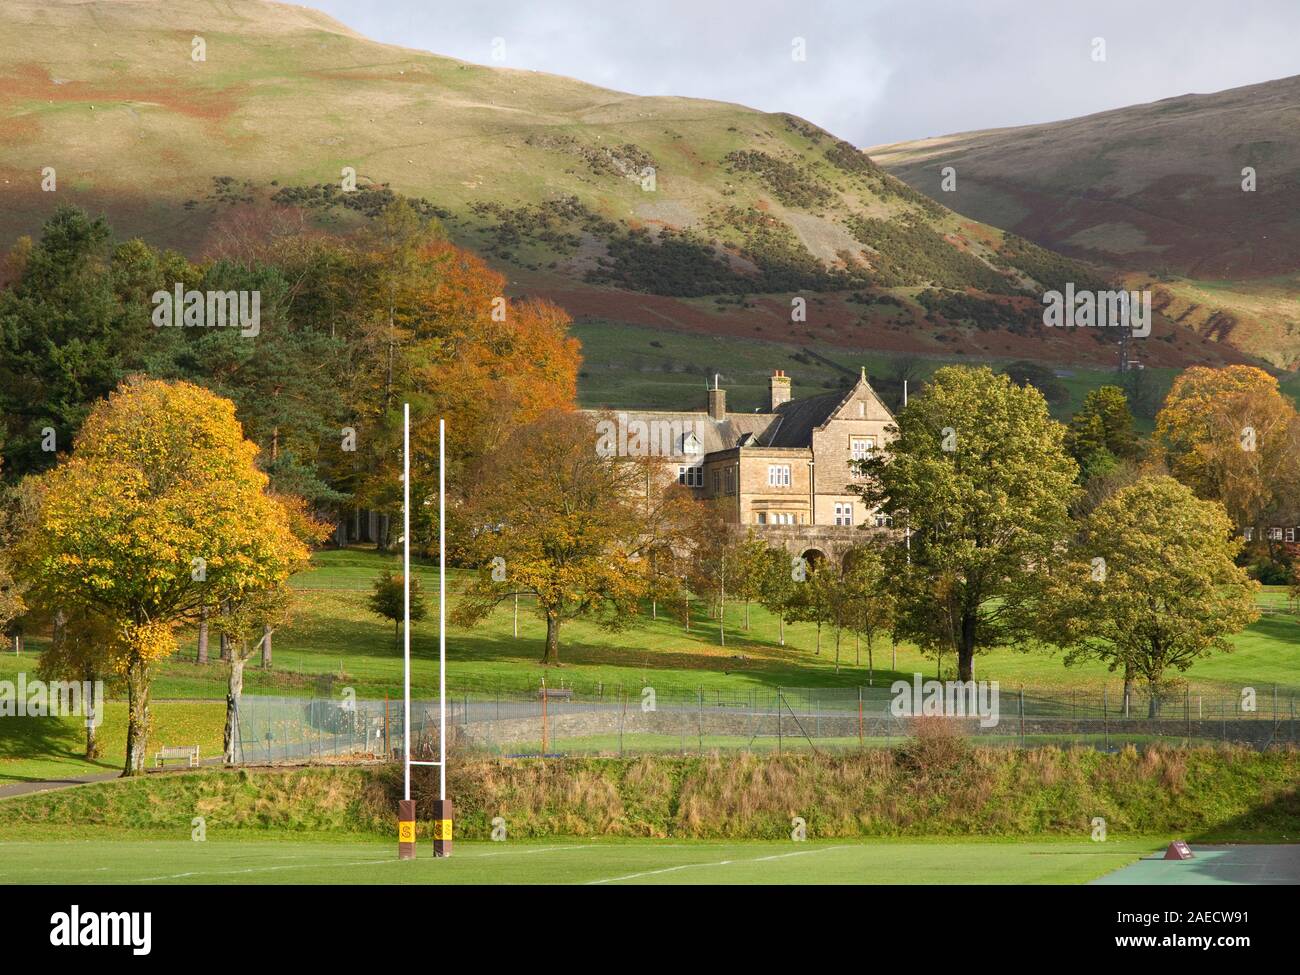 Les terrains de sports, Sedbergh School, Sedbergh, Cumbria, England, UK Banque D'Images